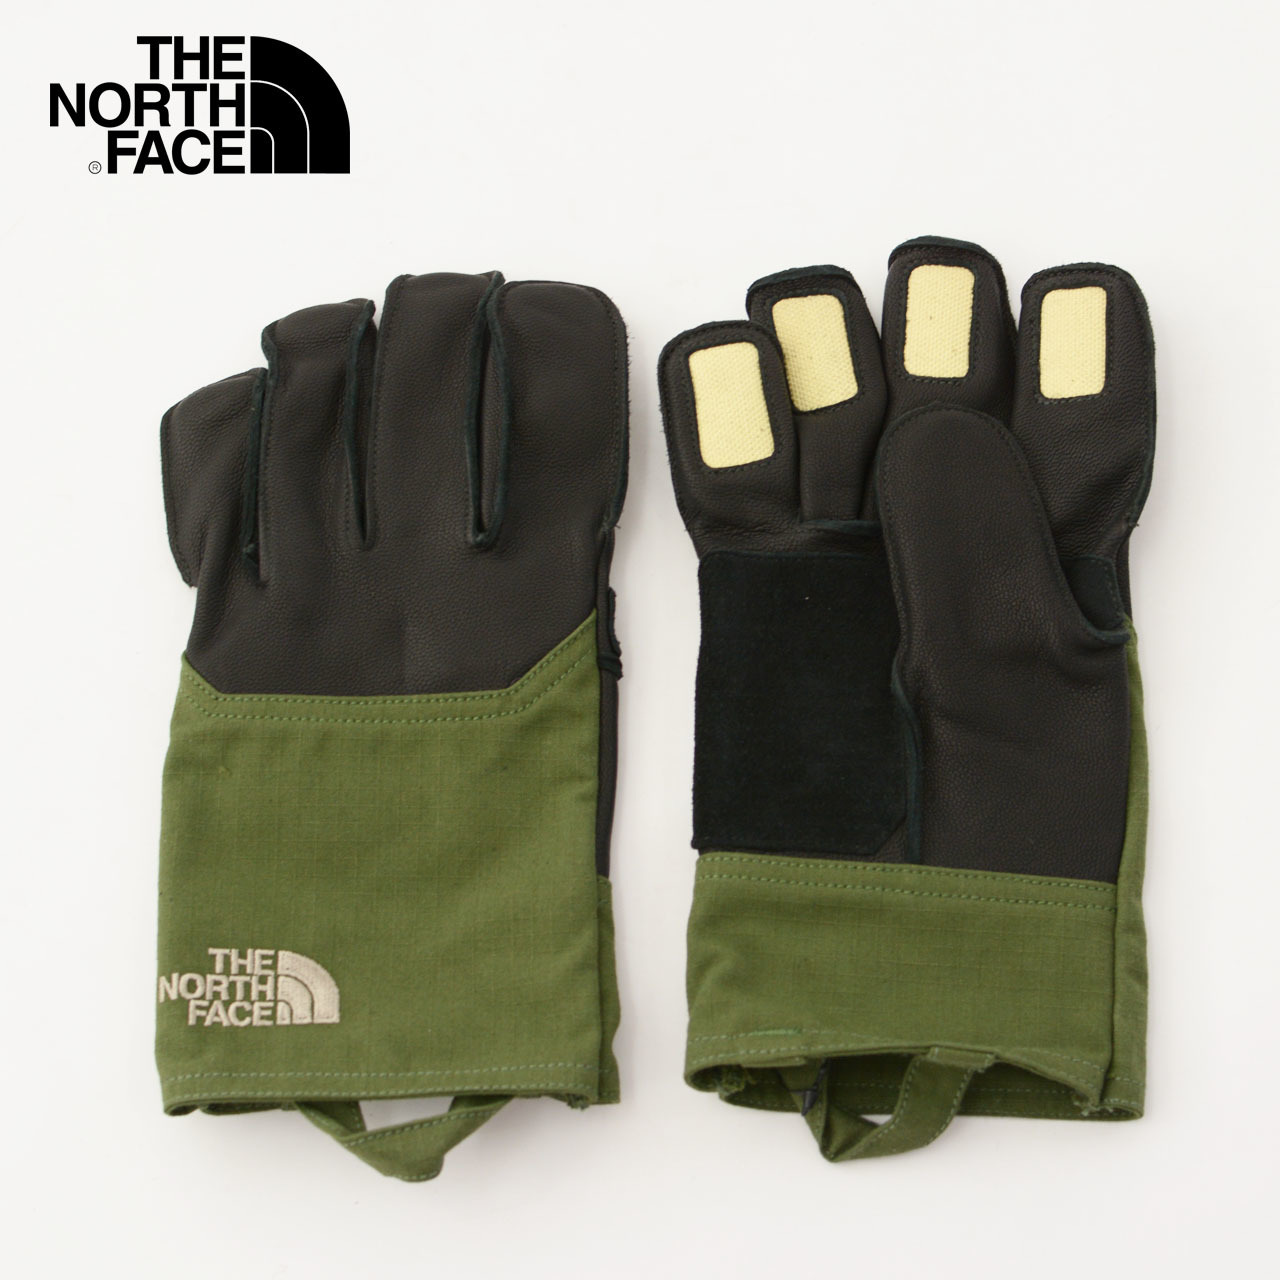 THE NORTH FACE [ザ ノースフェイス正規販売店] Fieludens Firefly Glove [NN12001]_f0051306_15252615.jpg